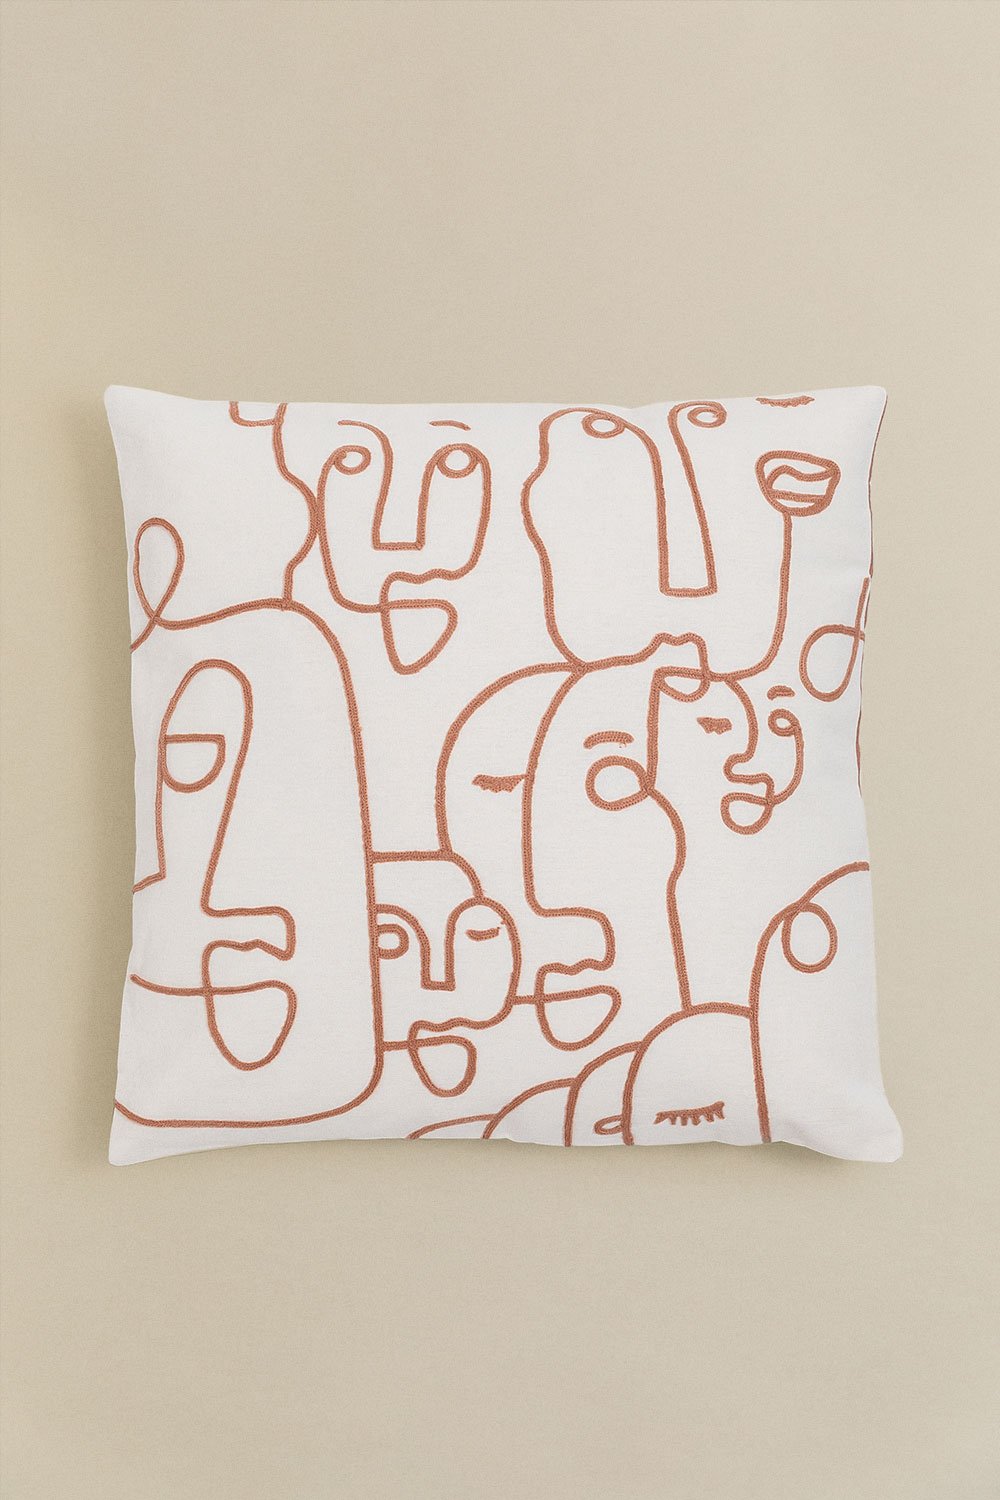 Square Cotton Cushion (45x45 cm) Mume, gallery image 1